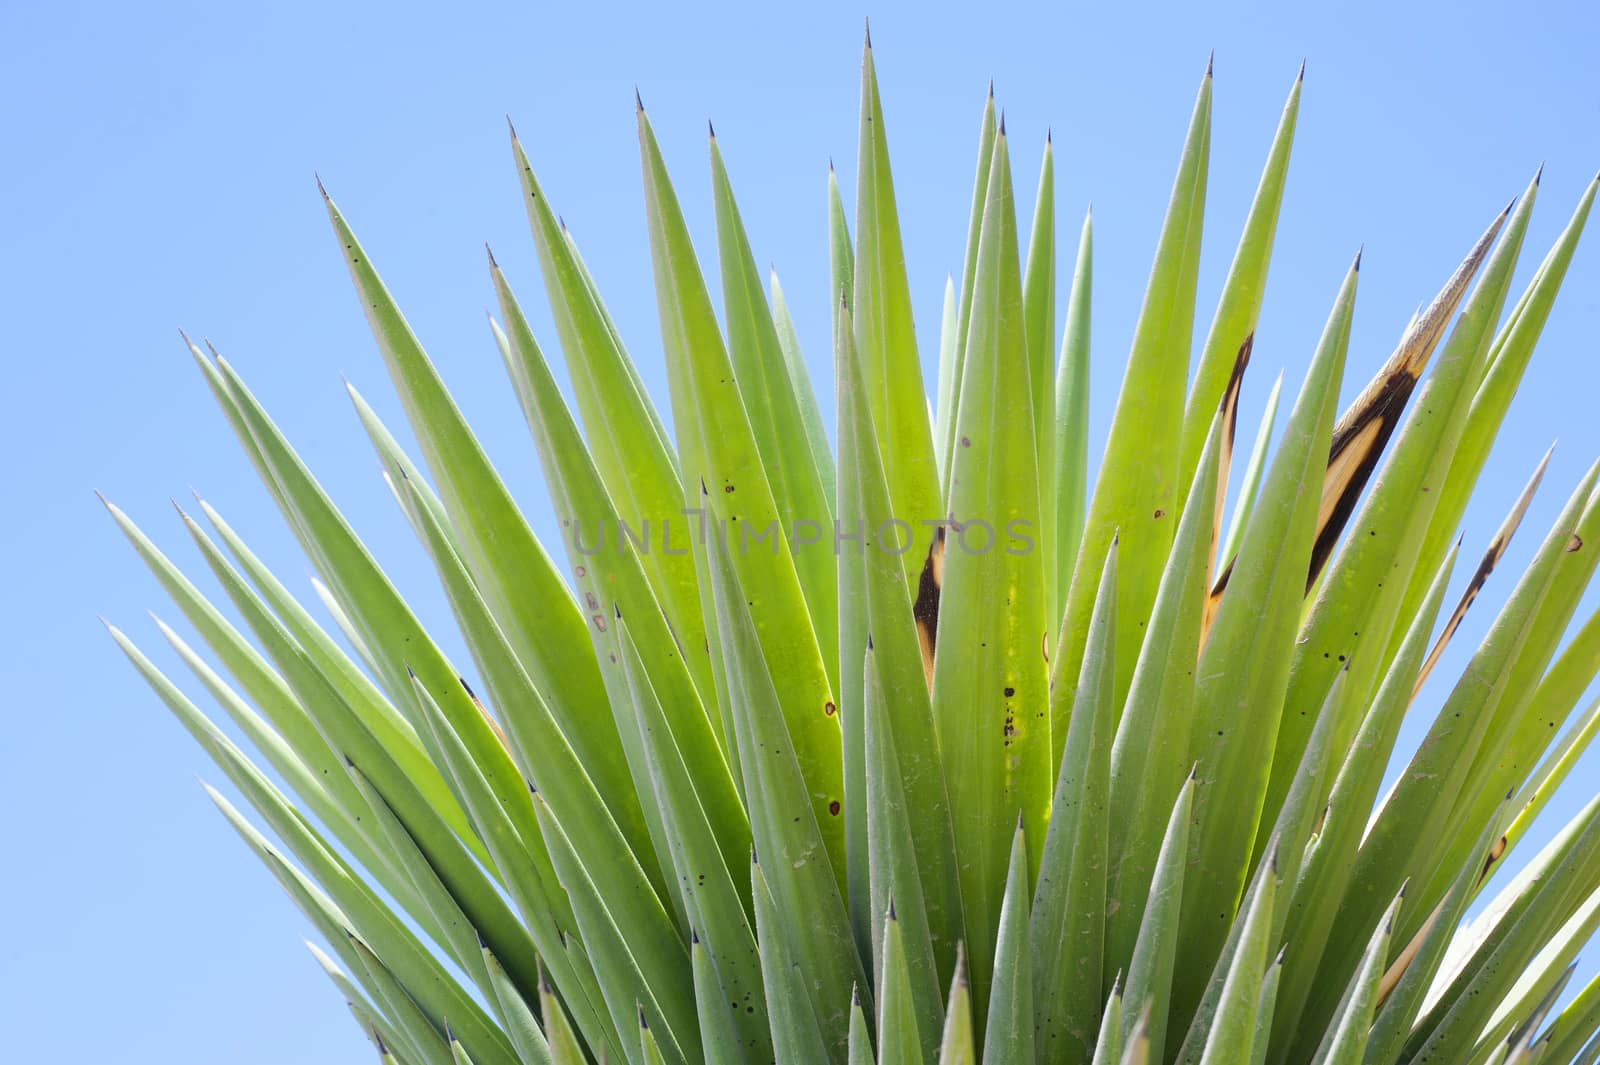 Leaves of a yukka plant against a blue sky by paulvinten